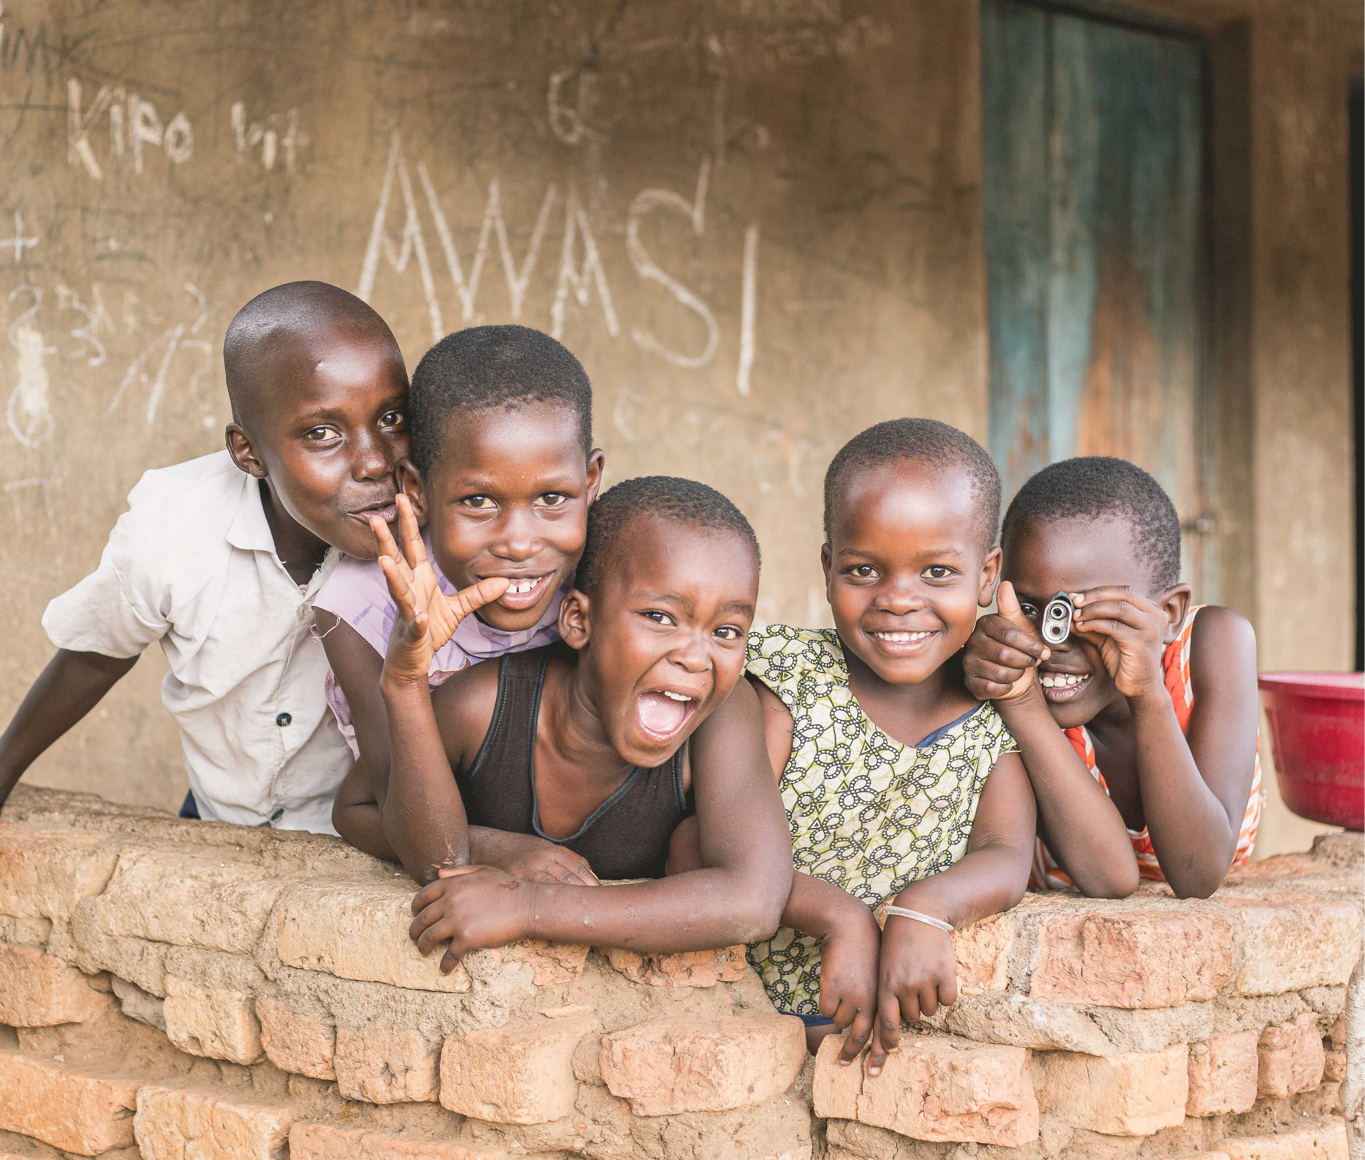 Five boys sit atop a brick wall in Tanzania.